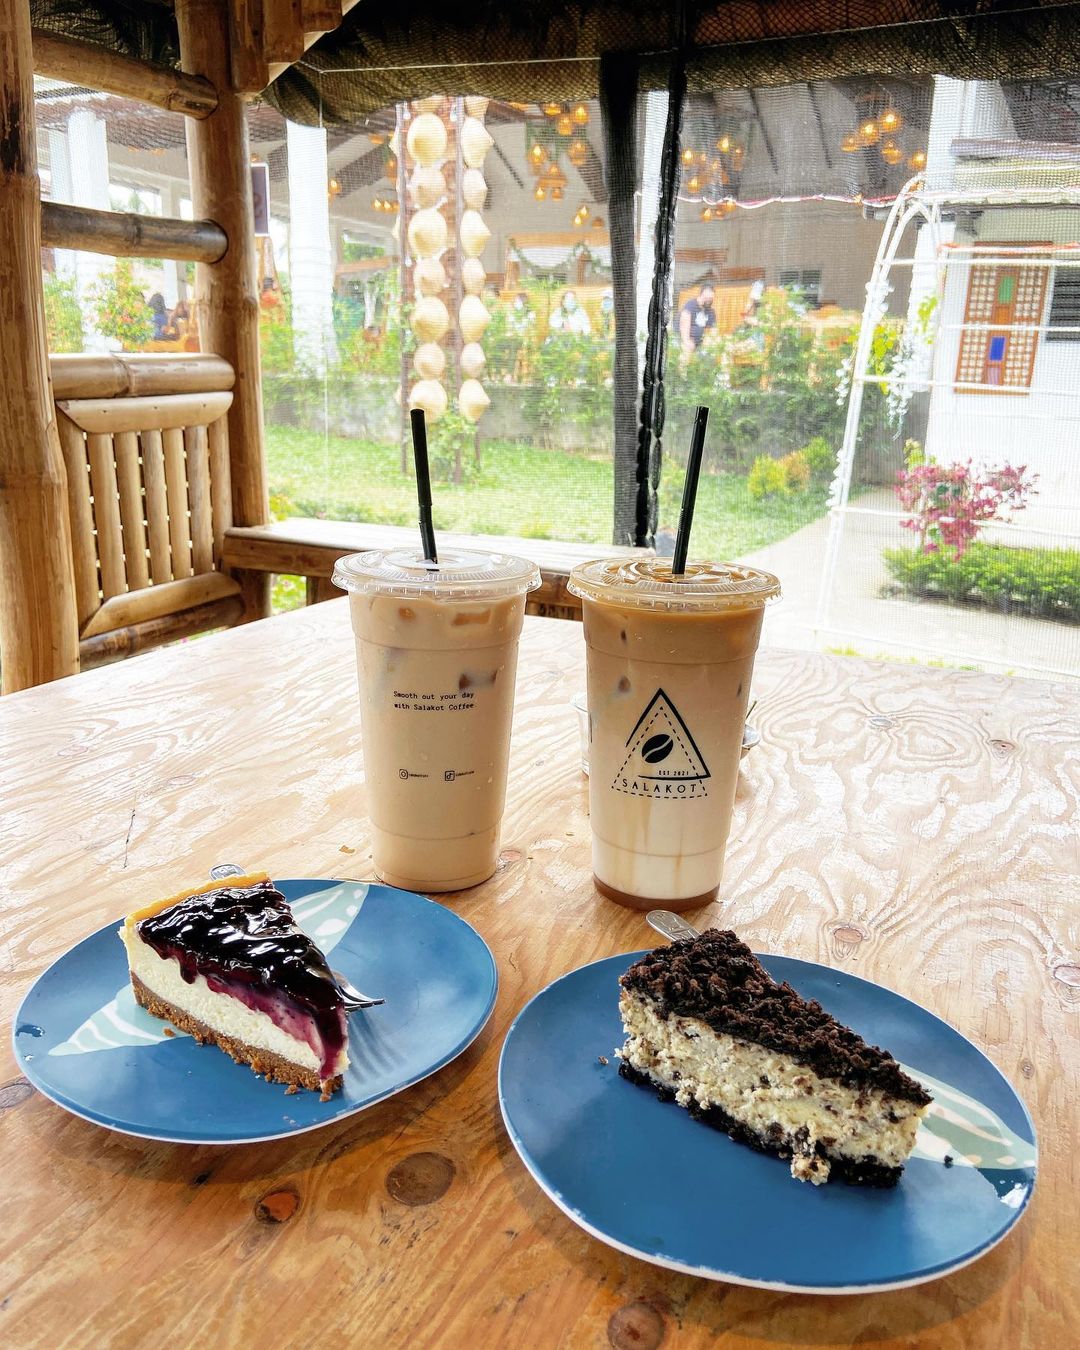 Salakot Cafe - coffee and cheesecake